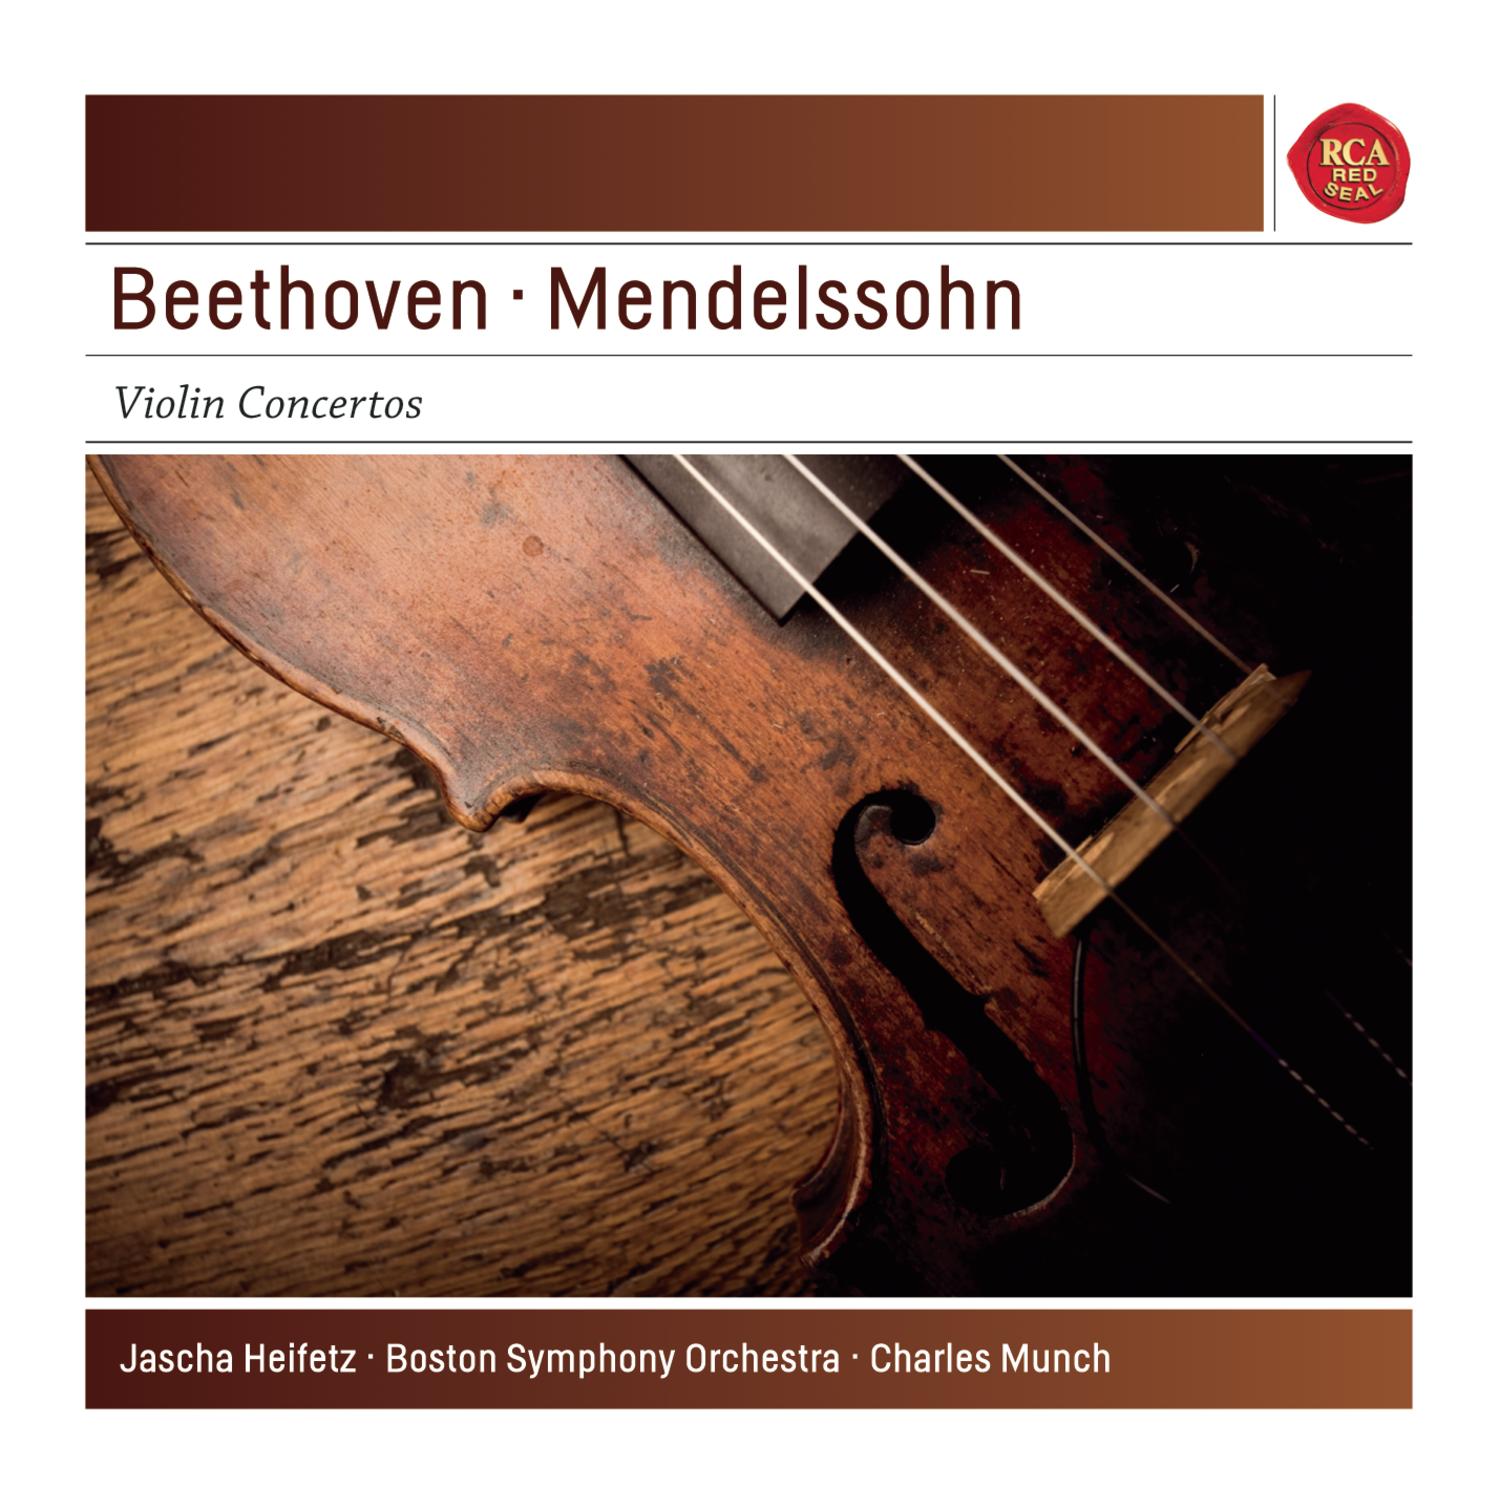 Jascha Heifetz - Jascha Heifetz Violin Concertos - Original Album 